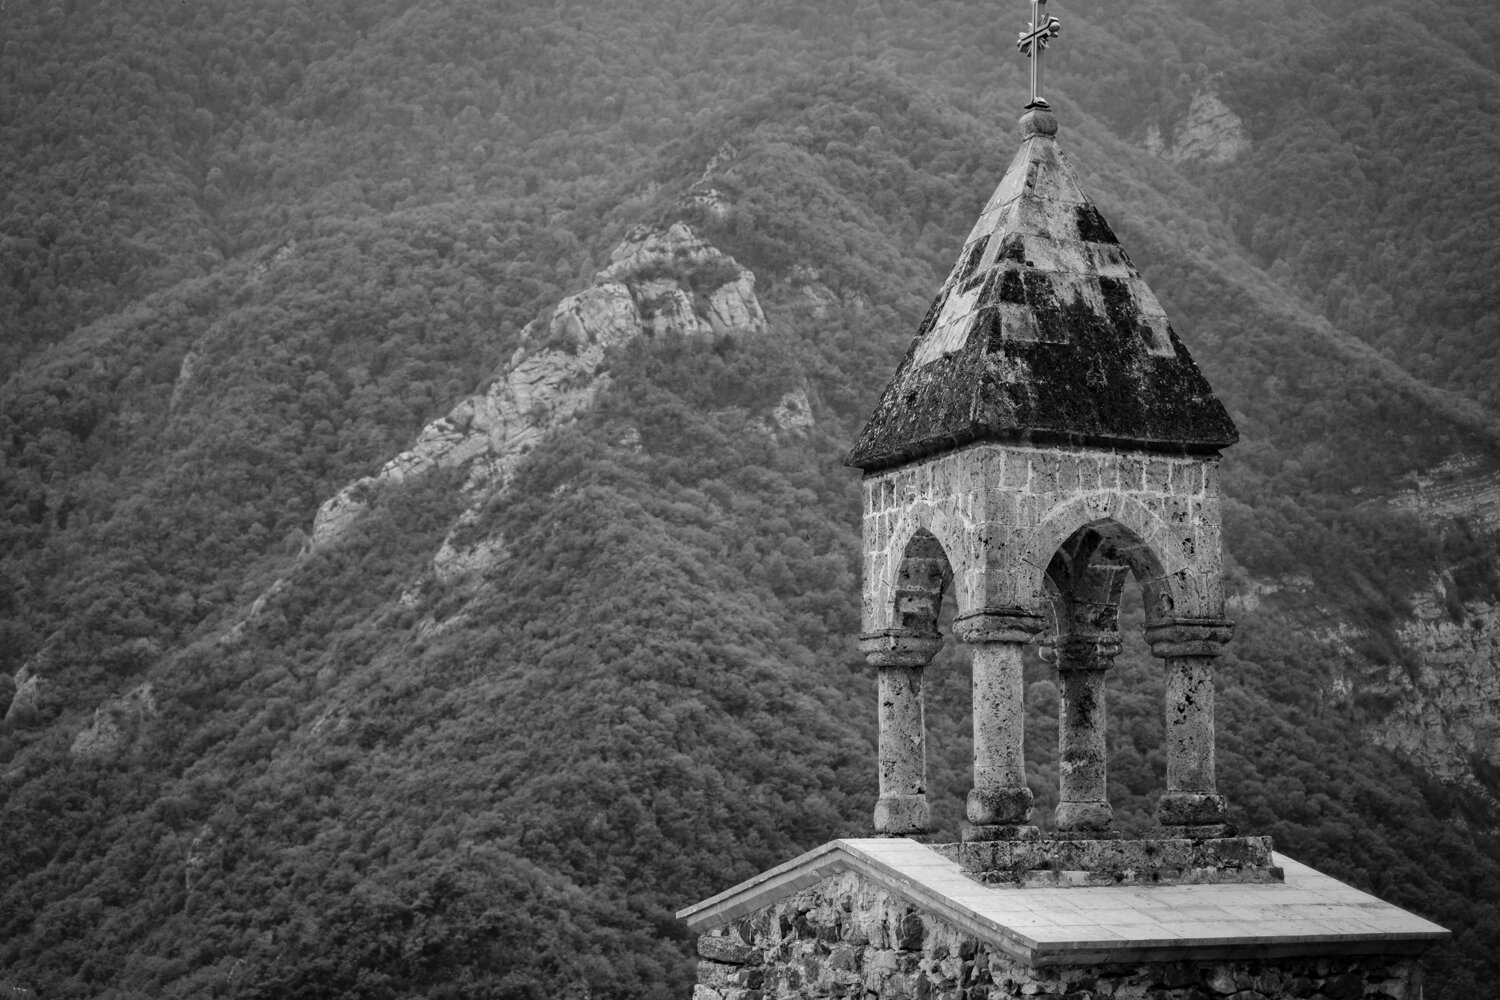 Davidank Monastery